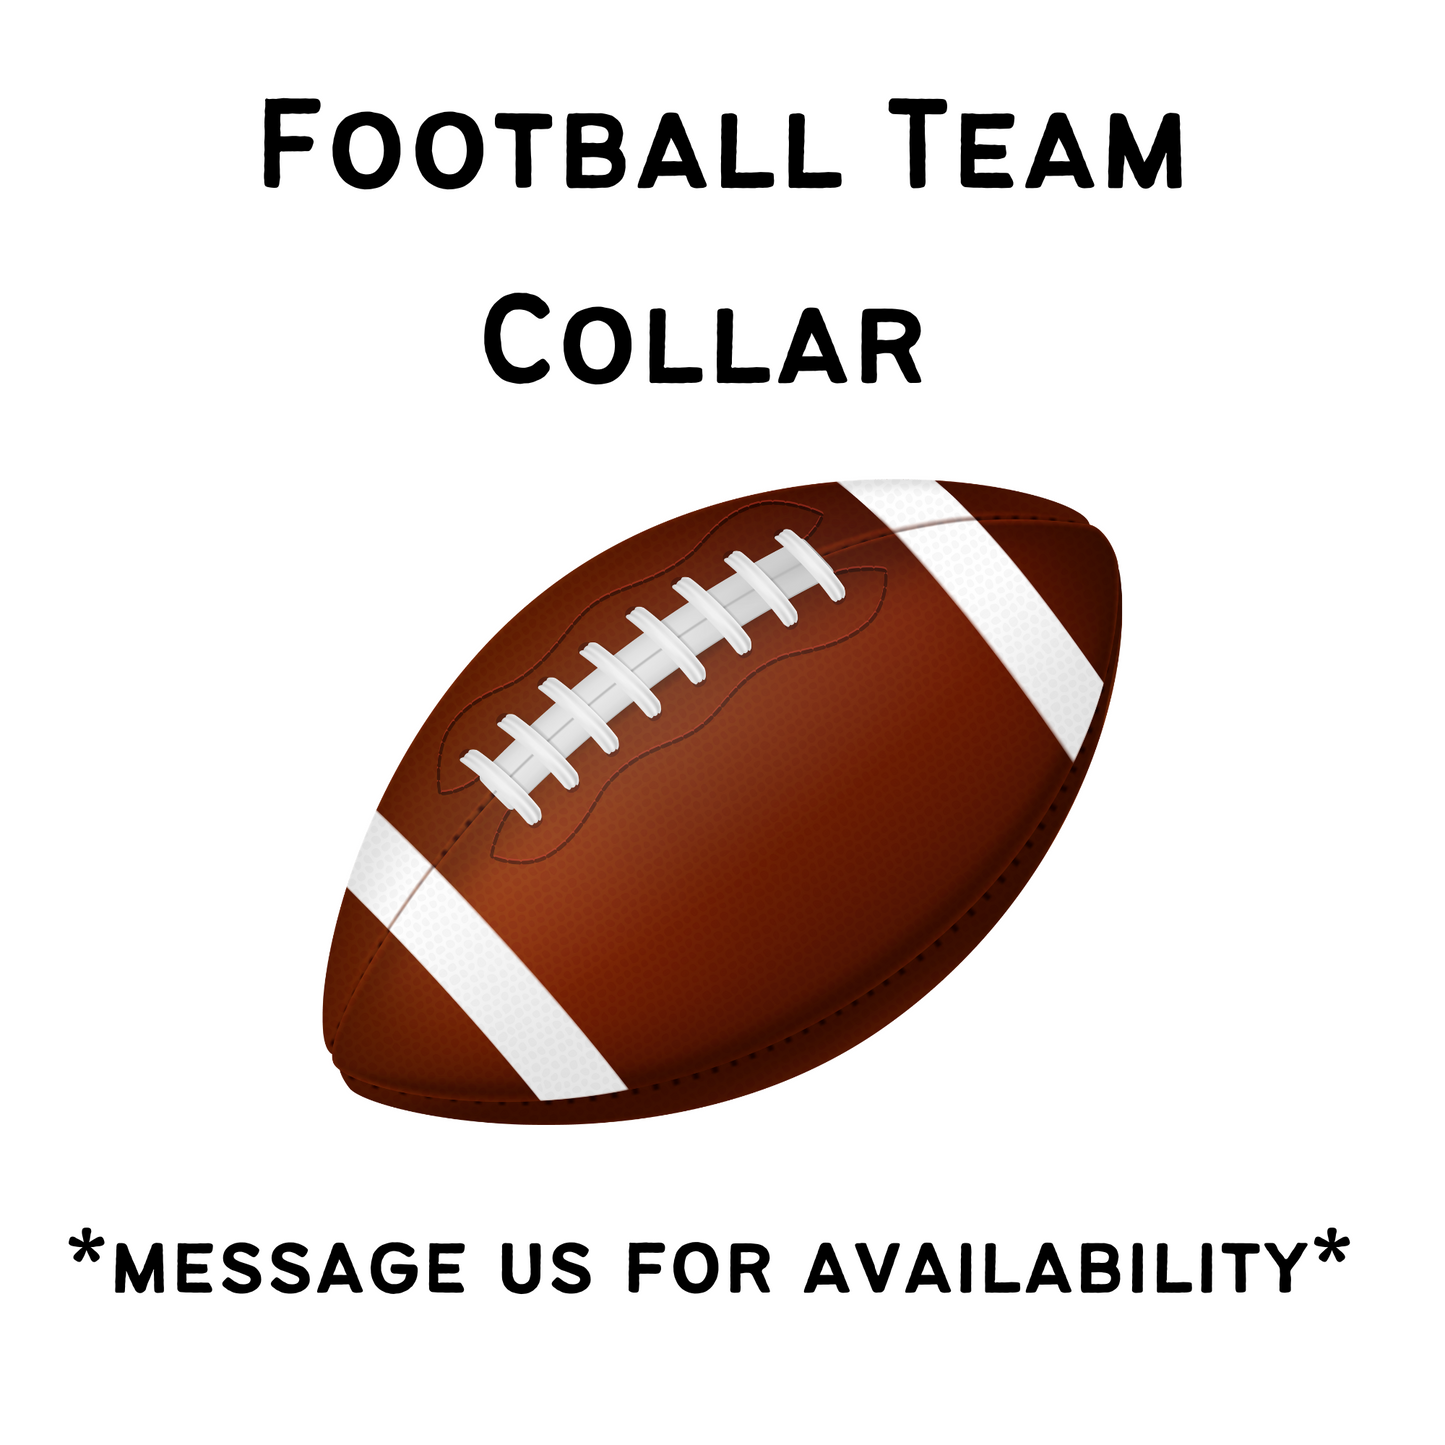 Football Team Collar (Message for Availability)